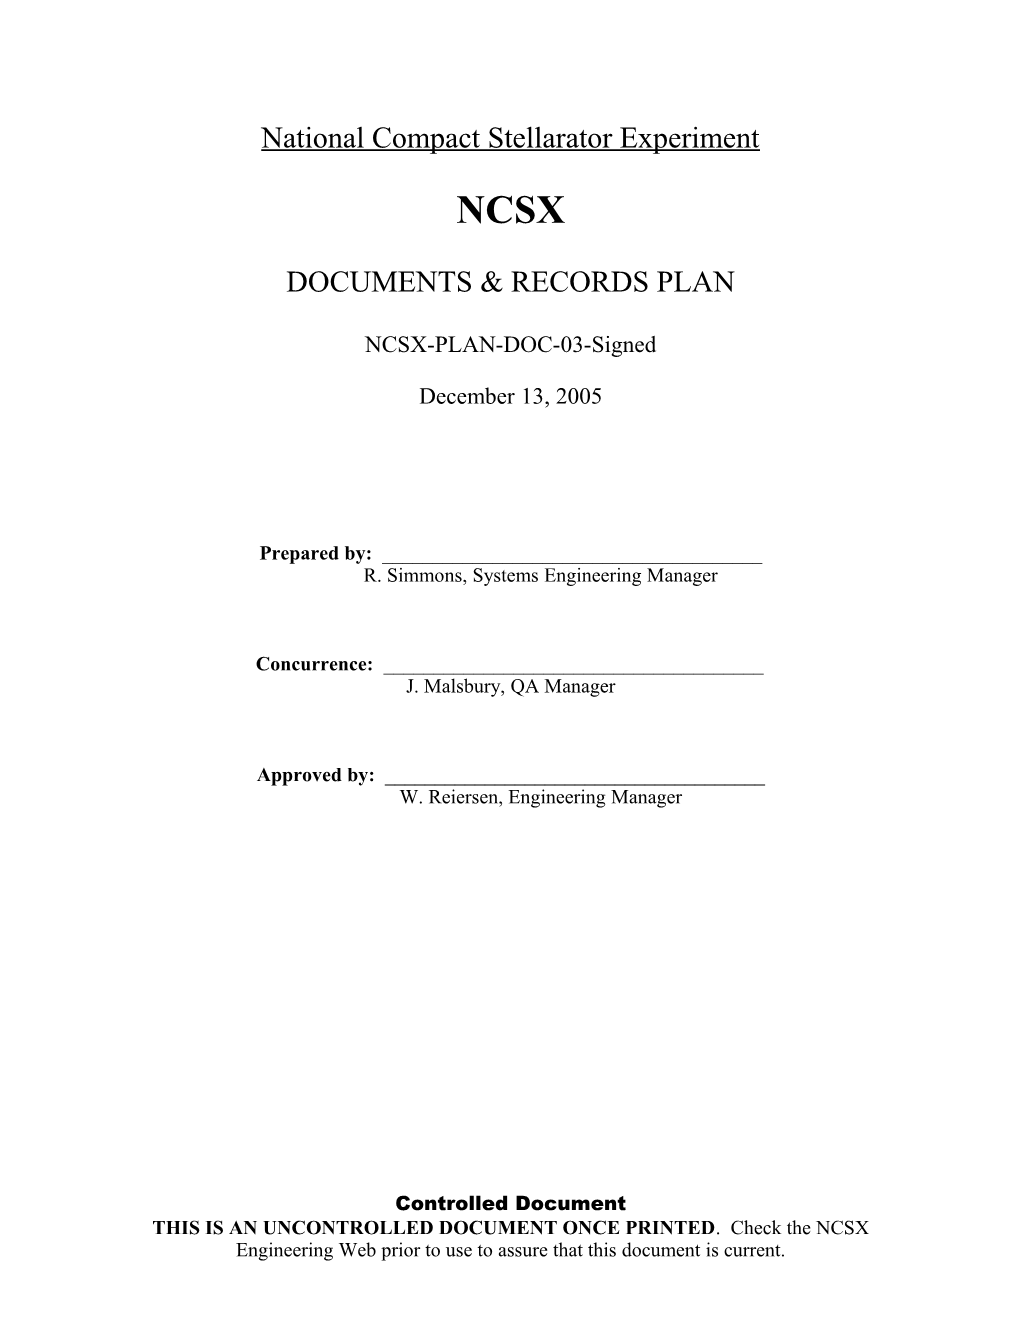 NSTX Documentation & Records Plan s1